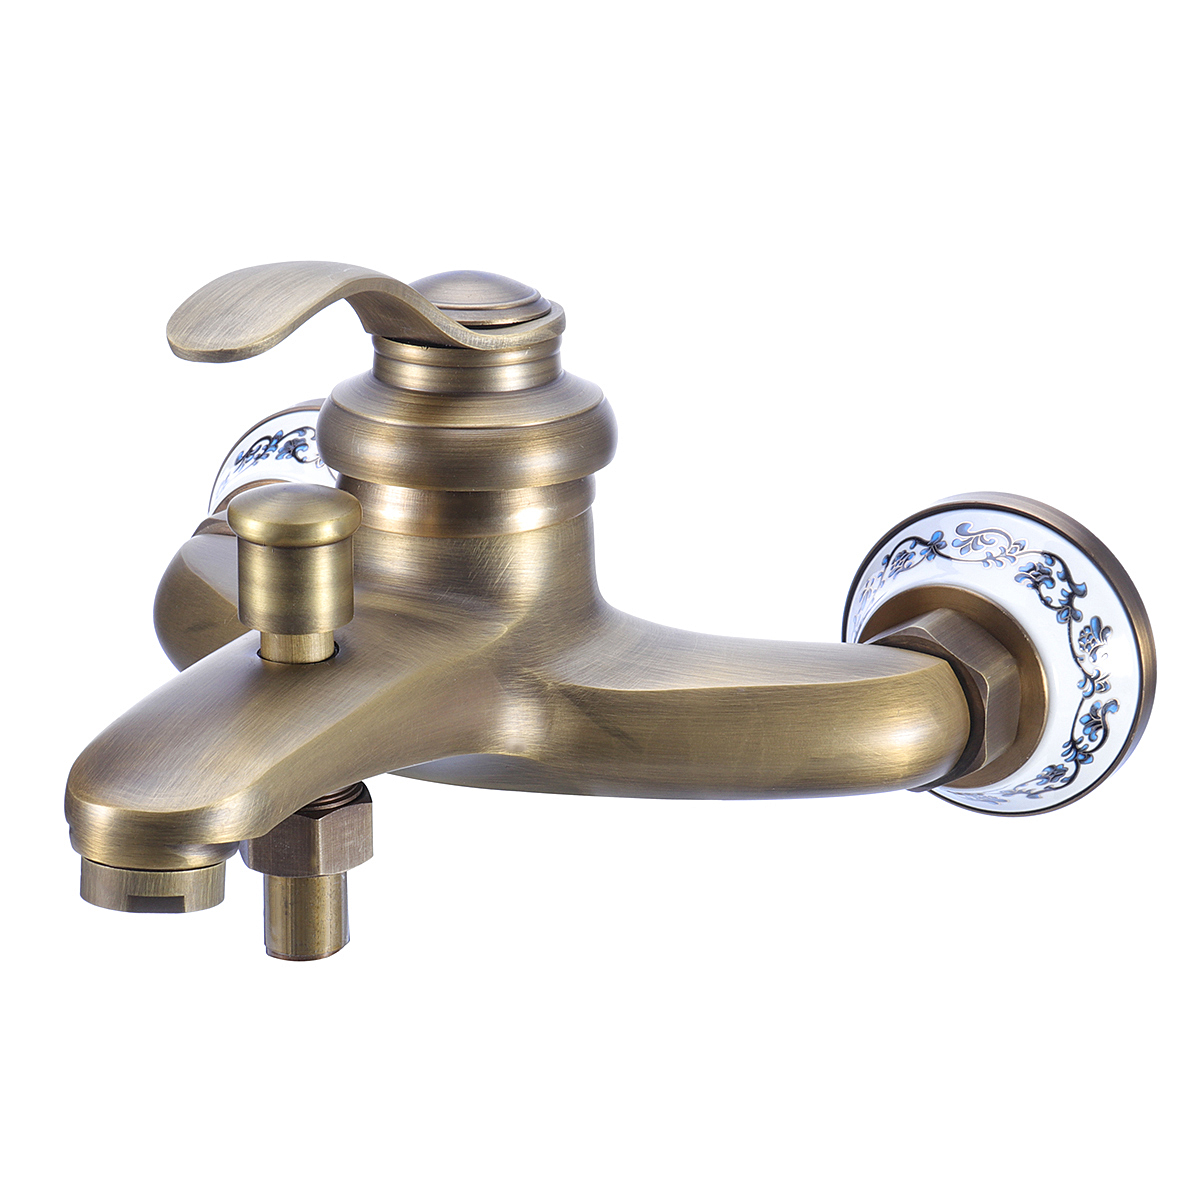 Antique-Brass-Shower-Head-Bathroom-Tub-Faucet-Hand-Held-Tap-Spray-Waterfall-Set-1395971